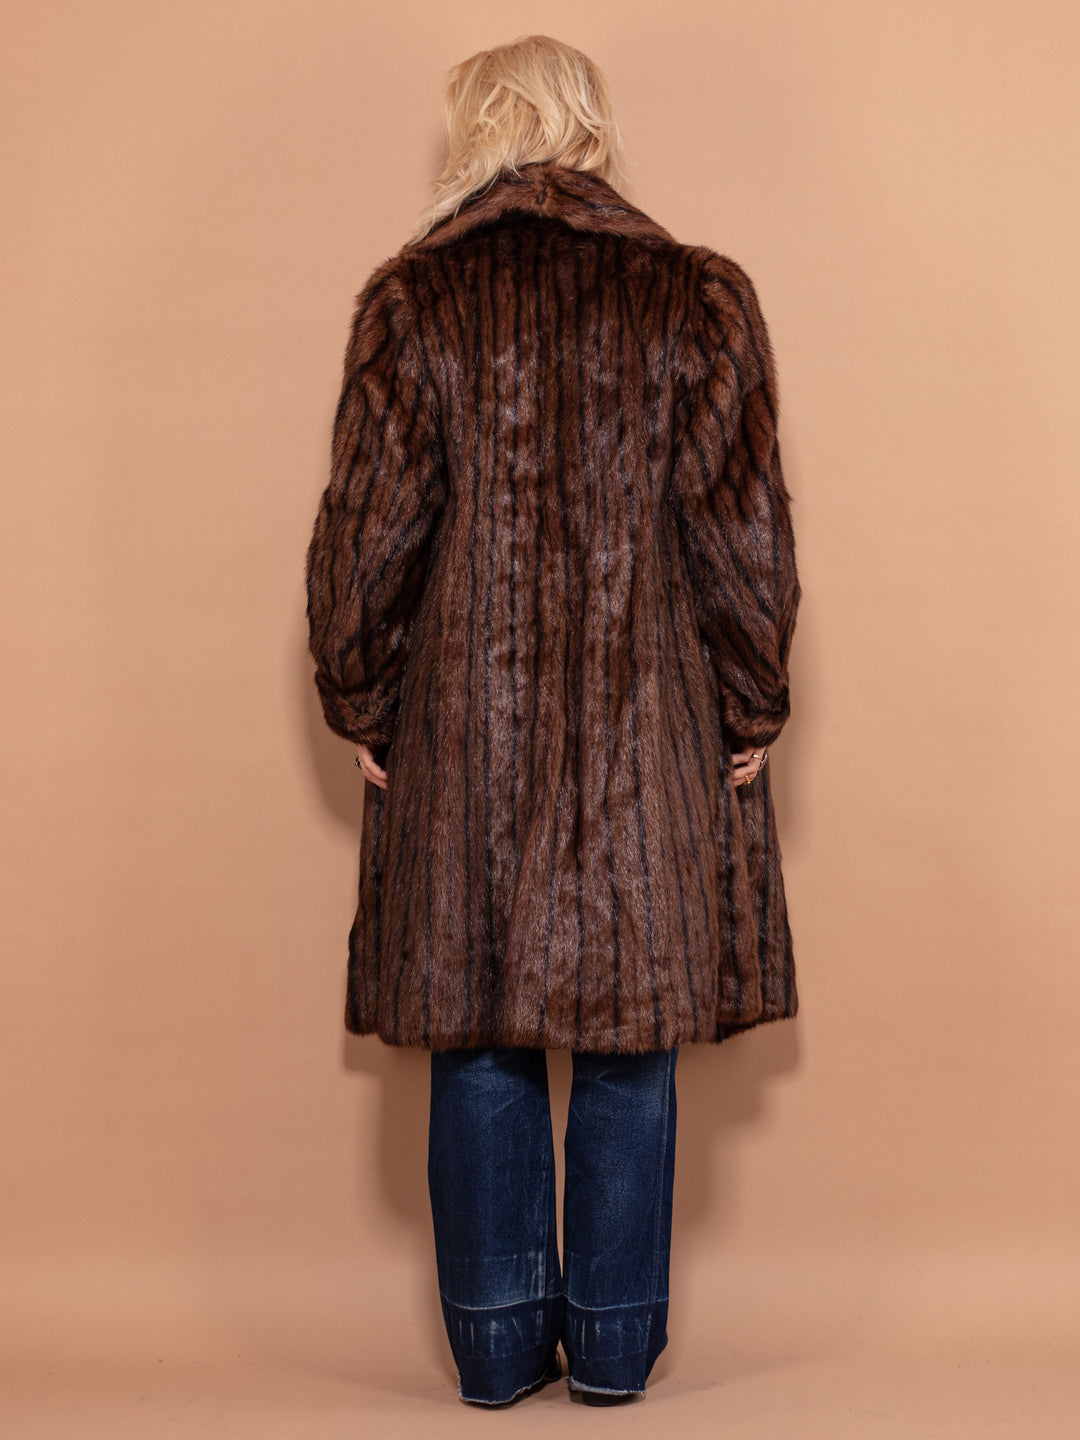 Vintage Real Fur Overcoat 60's, Size Large, Brown Striped Beaver Fur Coat, Luxurious Overcoat, Longline Warm Winter Coat, Retro Opera Coat